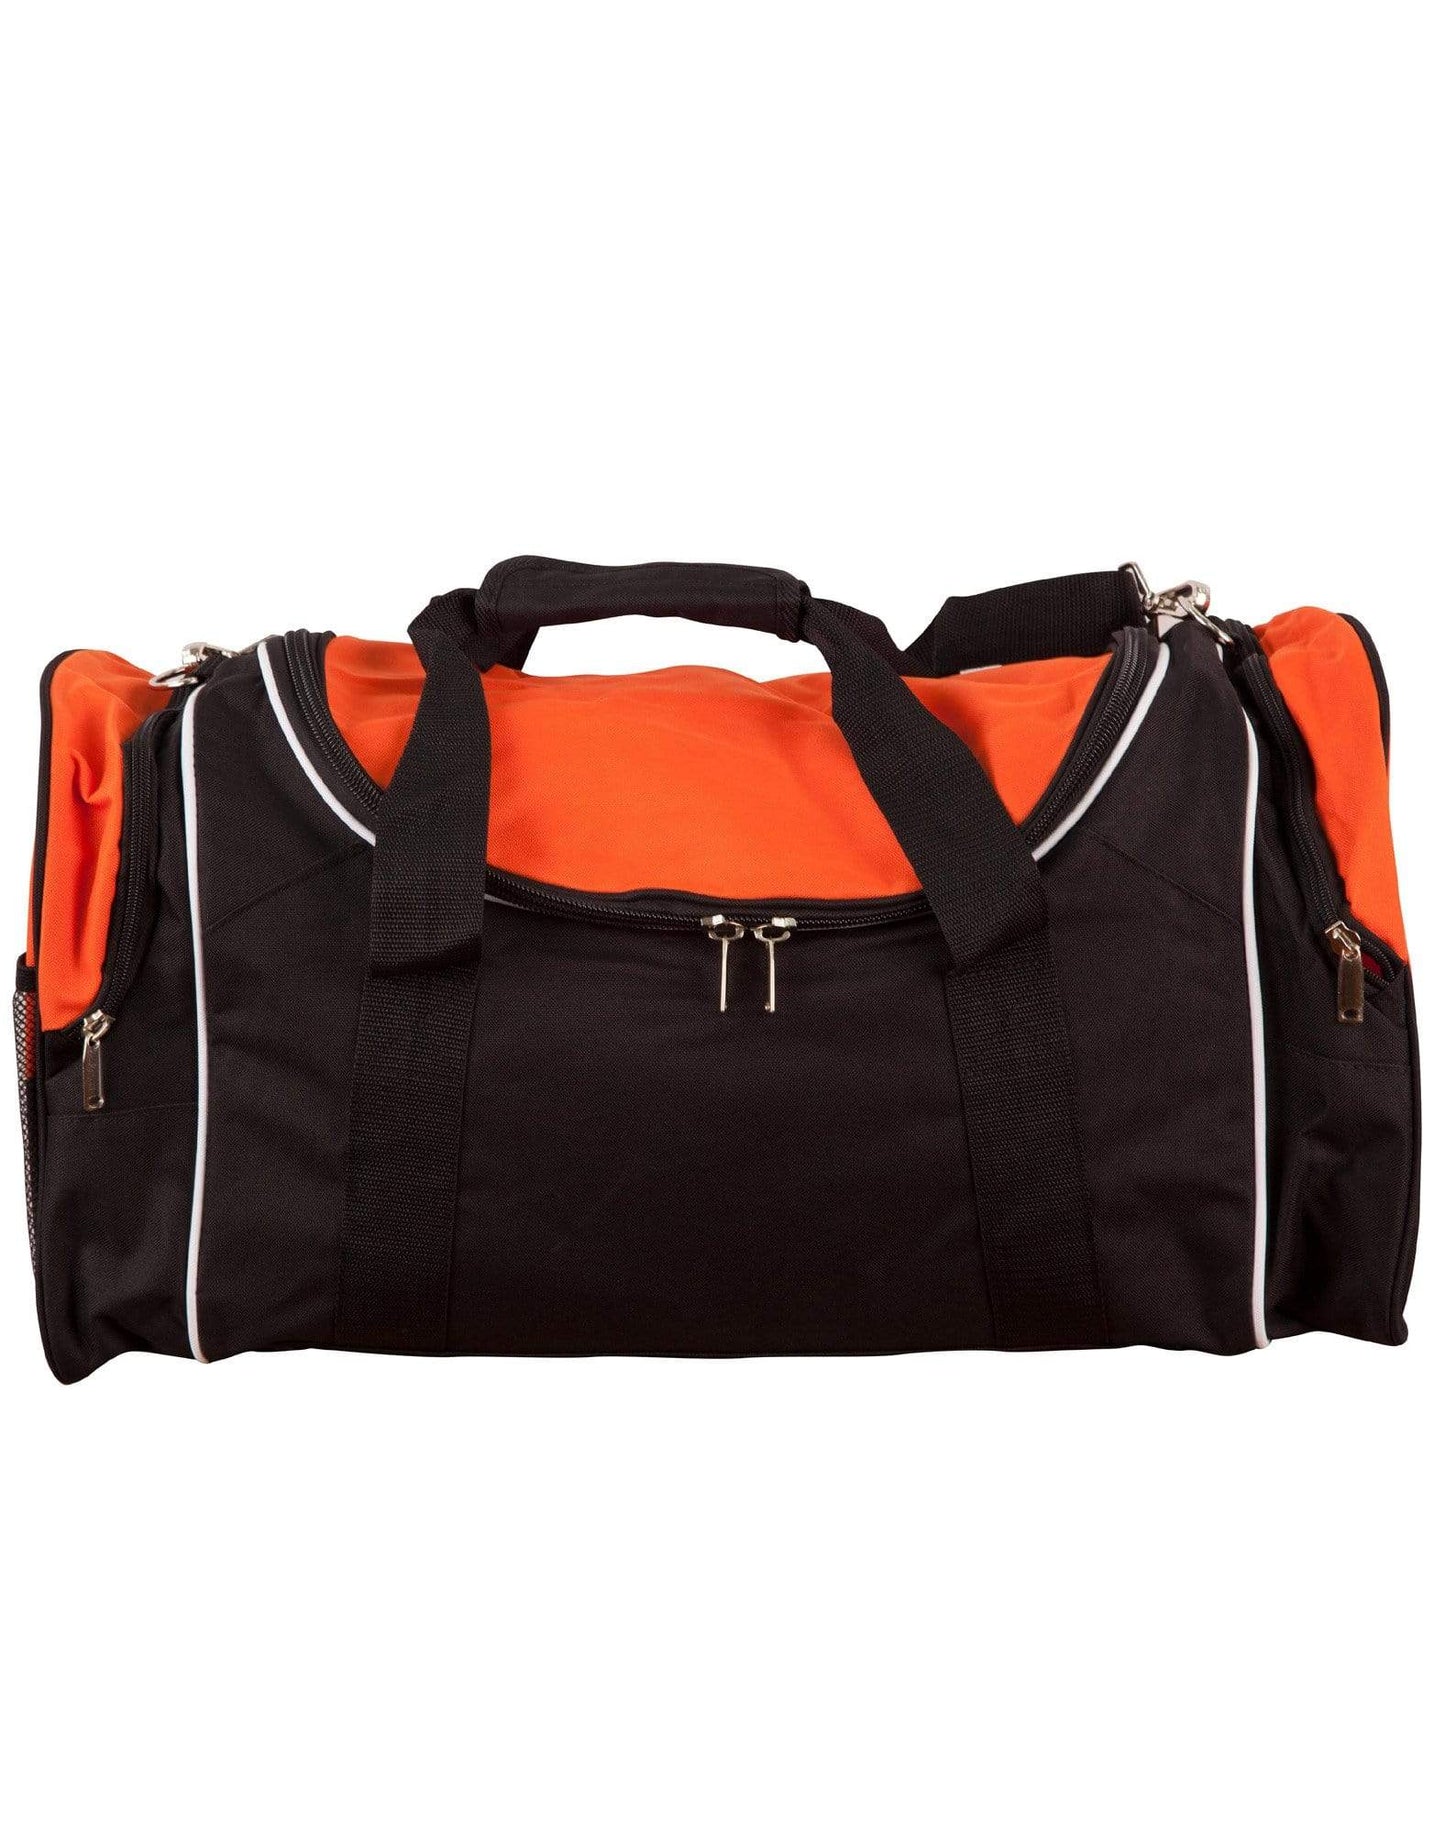 Winner Sports/ Travel Bag B2020 Active Wear Winning Spirit Black/White/Orange "(w)65cm x (h)32cm x (d)27cm, 56.2 Litres Capacity" 